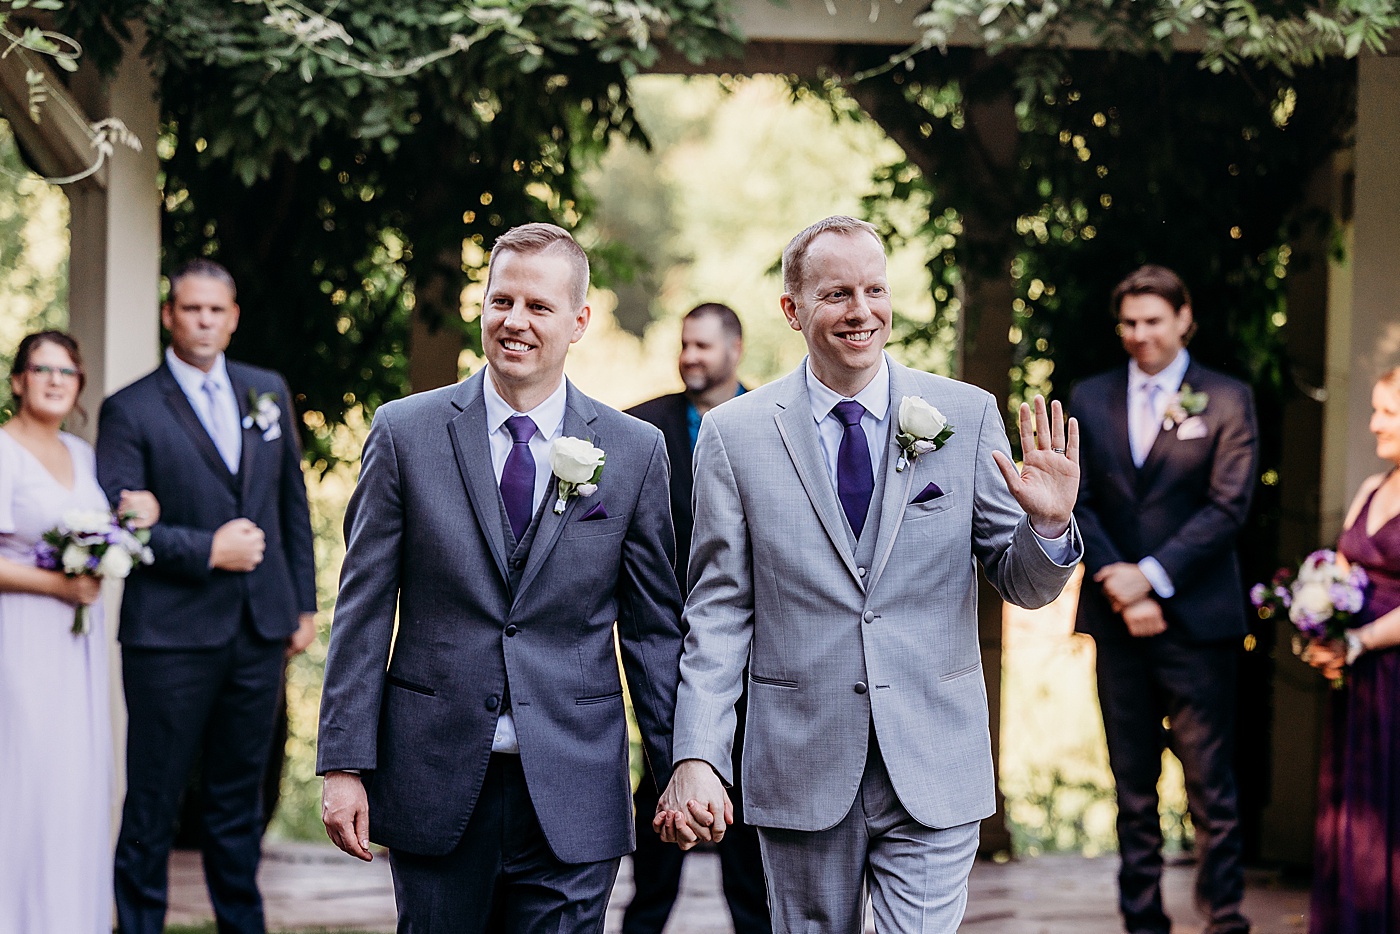 Ceremony at Sanders Estate, a Washington state intimate wedding venue | Megan Montalvo Photography